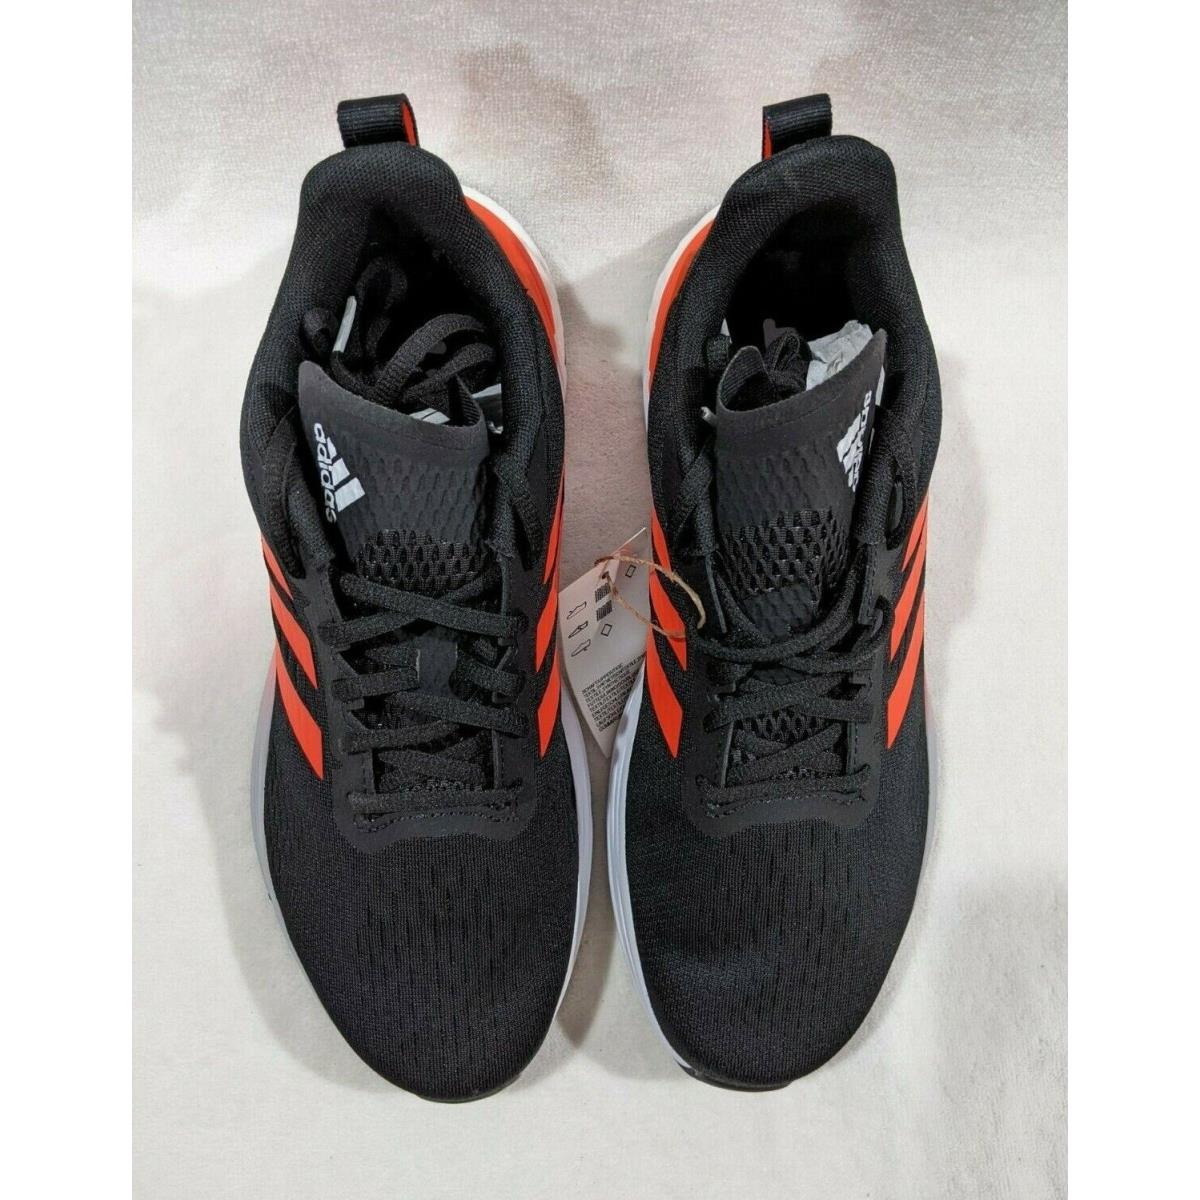 Adidas shoes Response Super Boost - Black , Orange 1